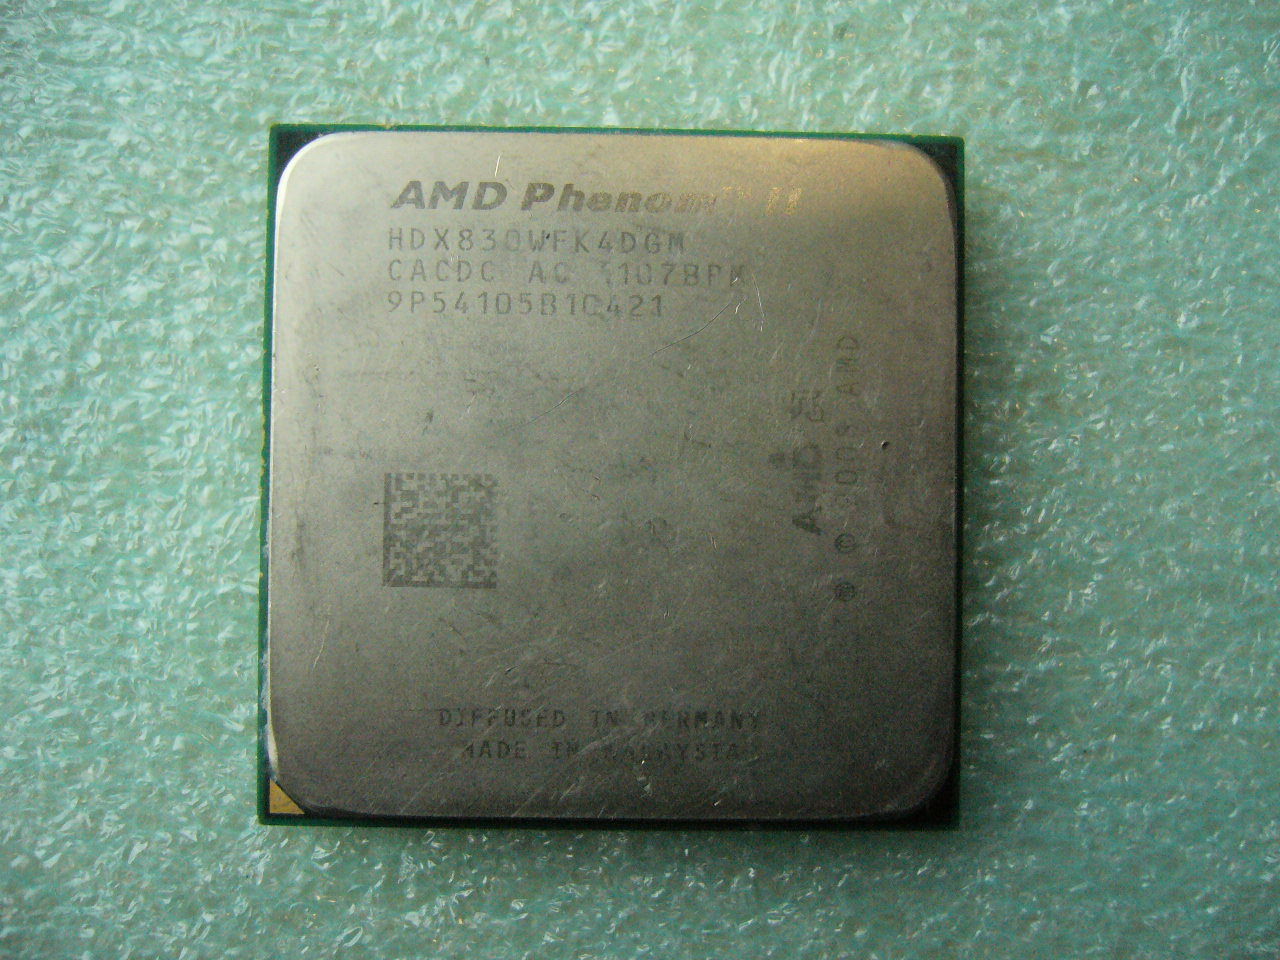 QTY 1x AMD Phenom II X4 830 2.8 GHz Quad-Core (HDX830WFK4DGM) CPU AM3 938-Pin